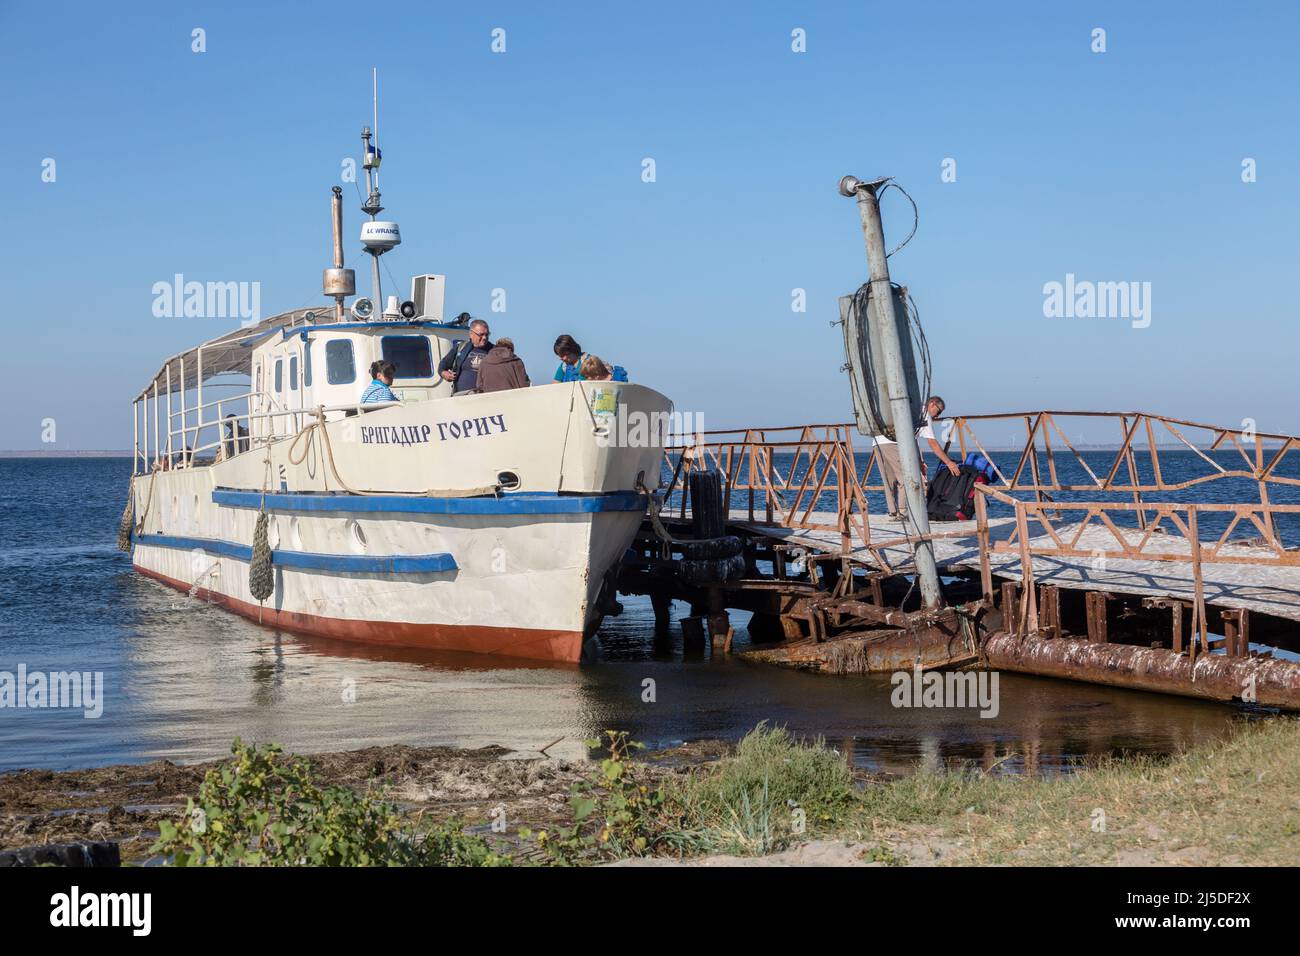 OCHAKIV, MYKOLAIV REGION, UKRAINE - SEPTEMBER 16, 2019: people are loaded on the civilian ship 'Brigadier Gorich' near the pier, Black Sea Stock Photo